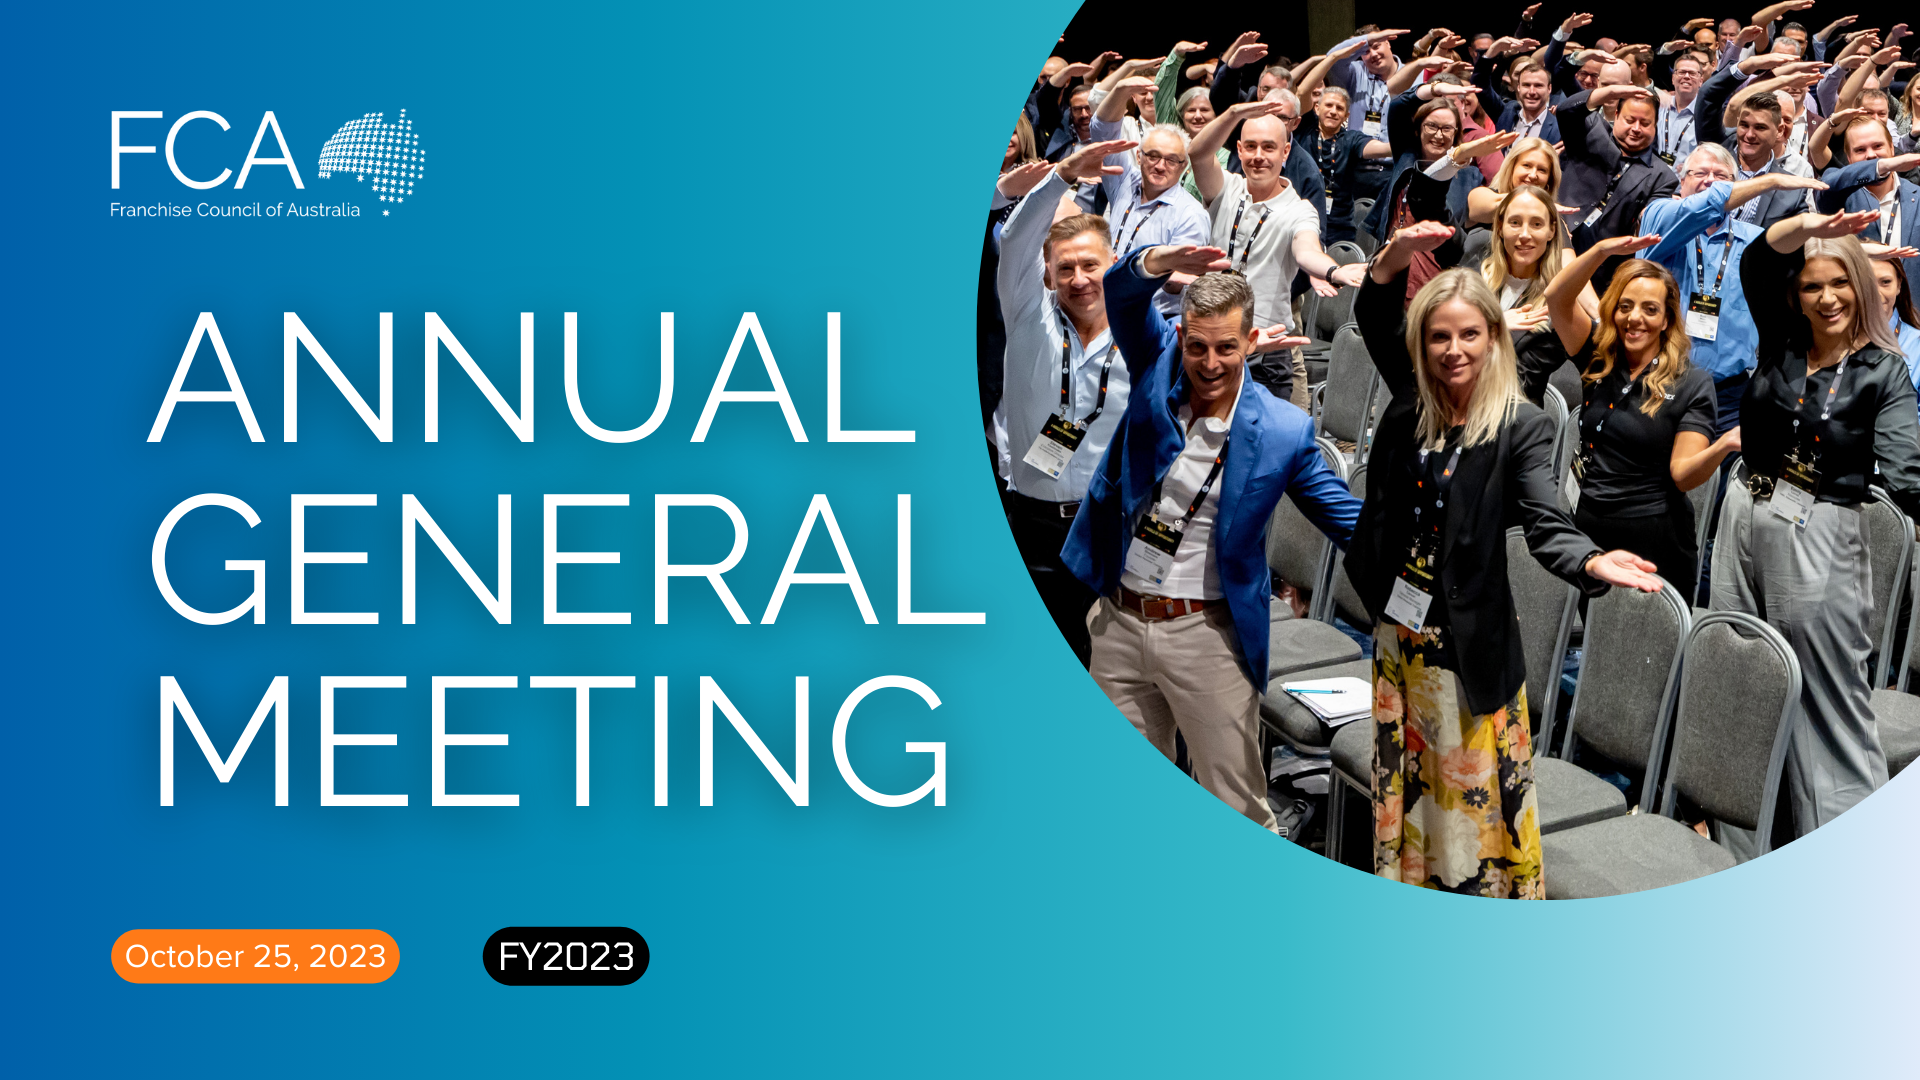 FCA ANNUAL GENERAL MEETING 2022/2023 - Online Meeting (Zoom) Tickets